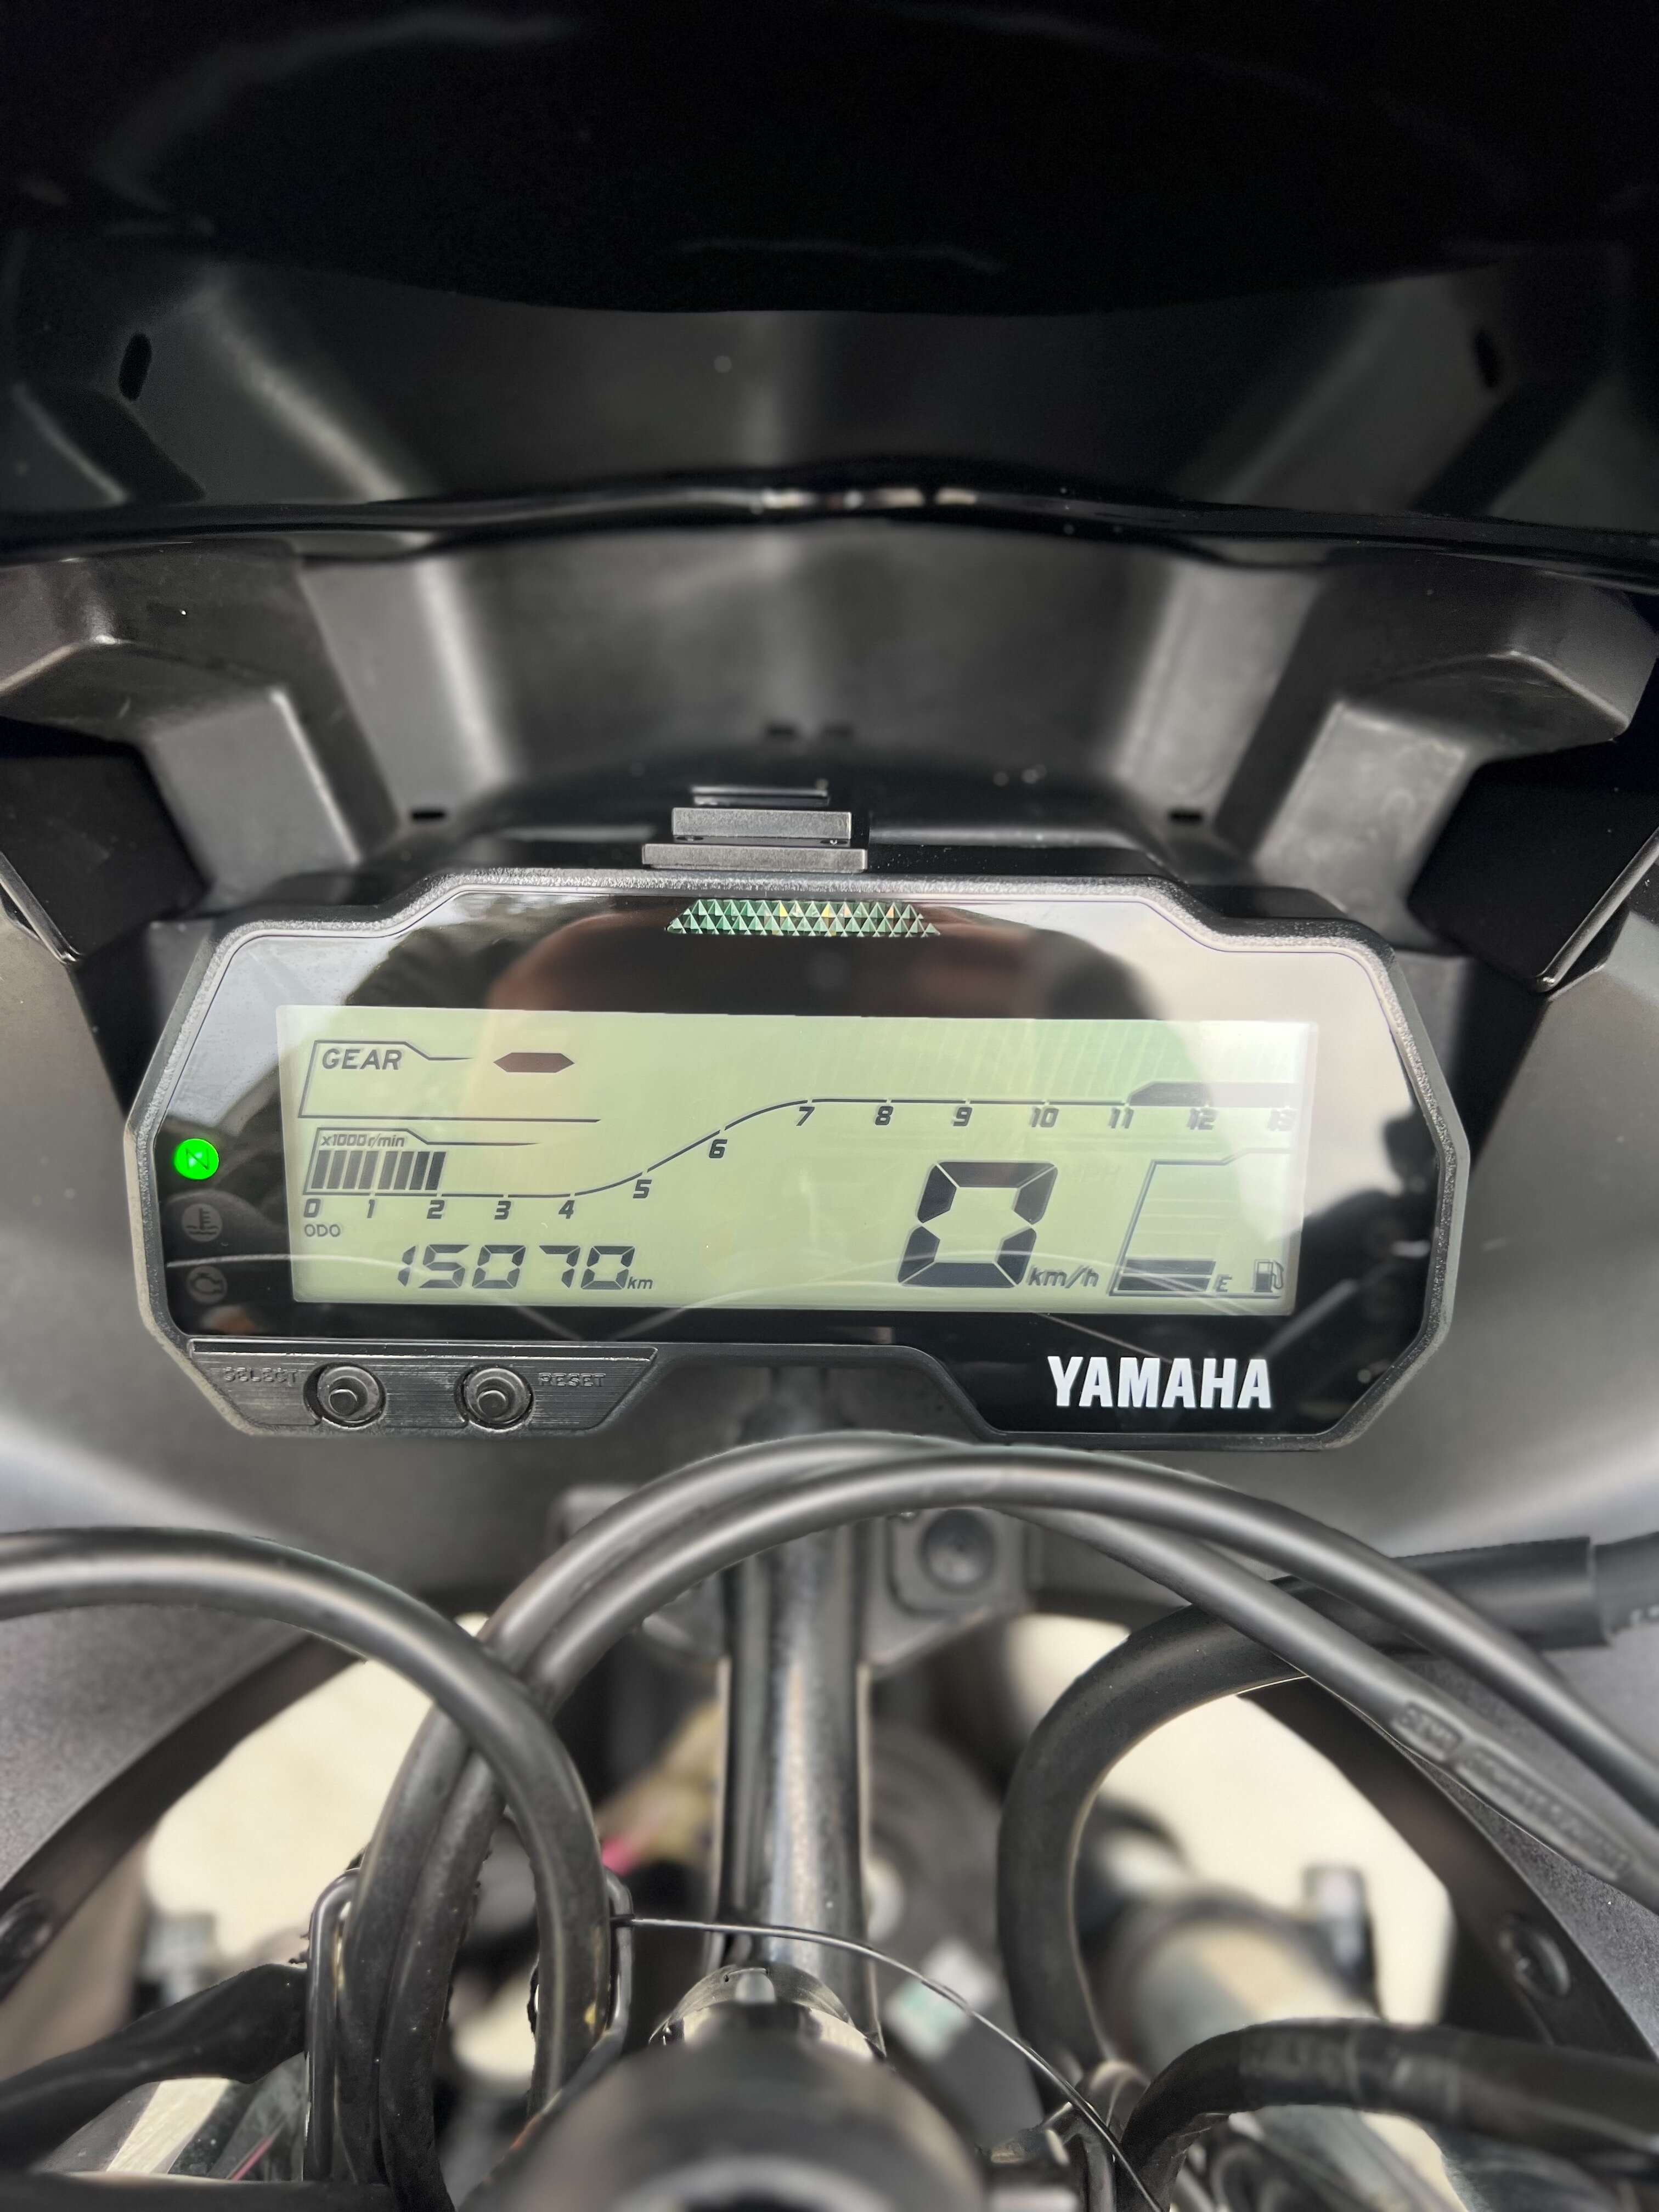 YAMAHA YZF-R15 - 中古/二手車出售中 2021年 R15V3 ABS LV排氣管 超多改裝 無摔 無事故 | 阿宏大型重機買賣